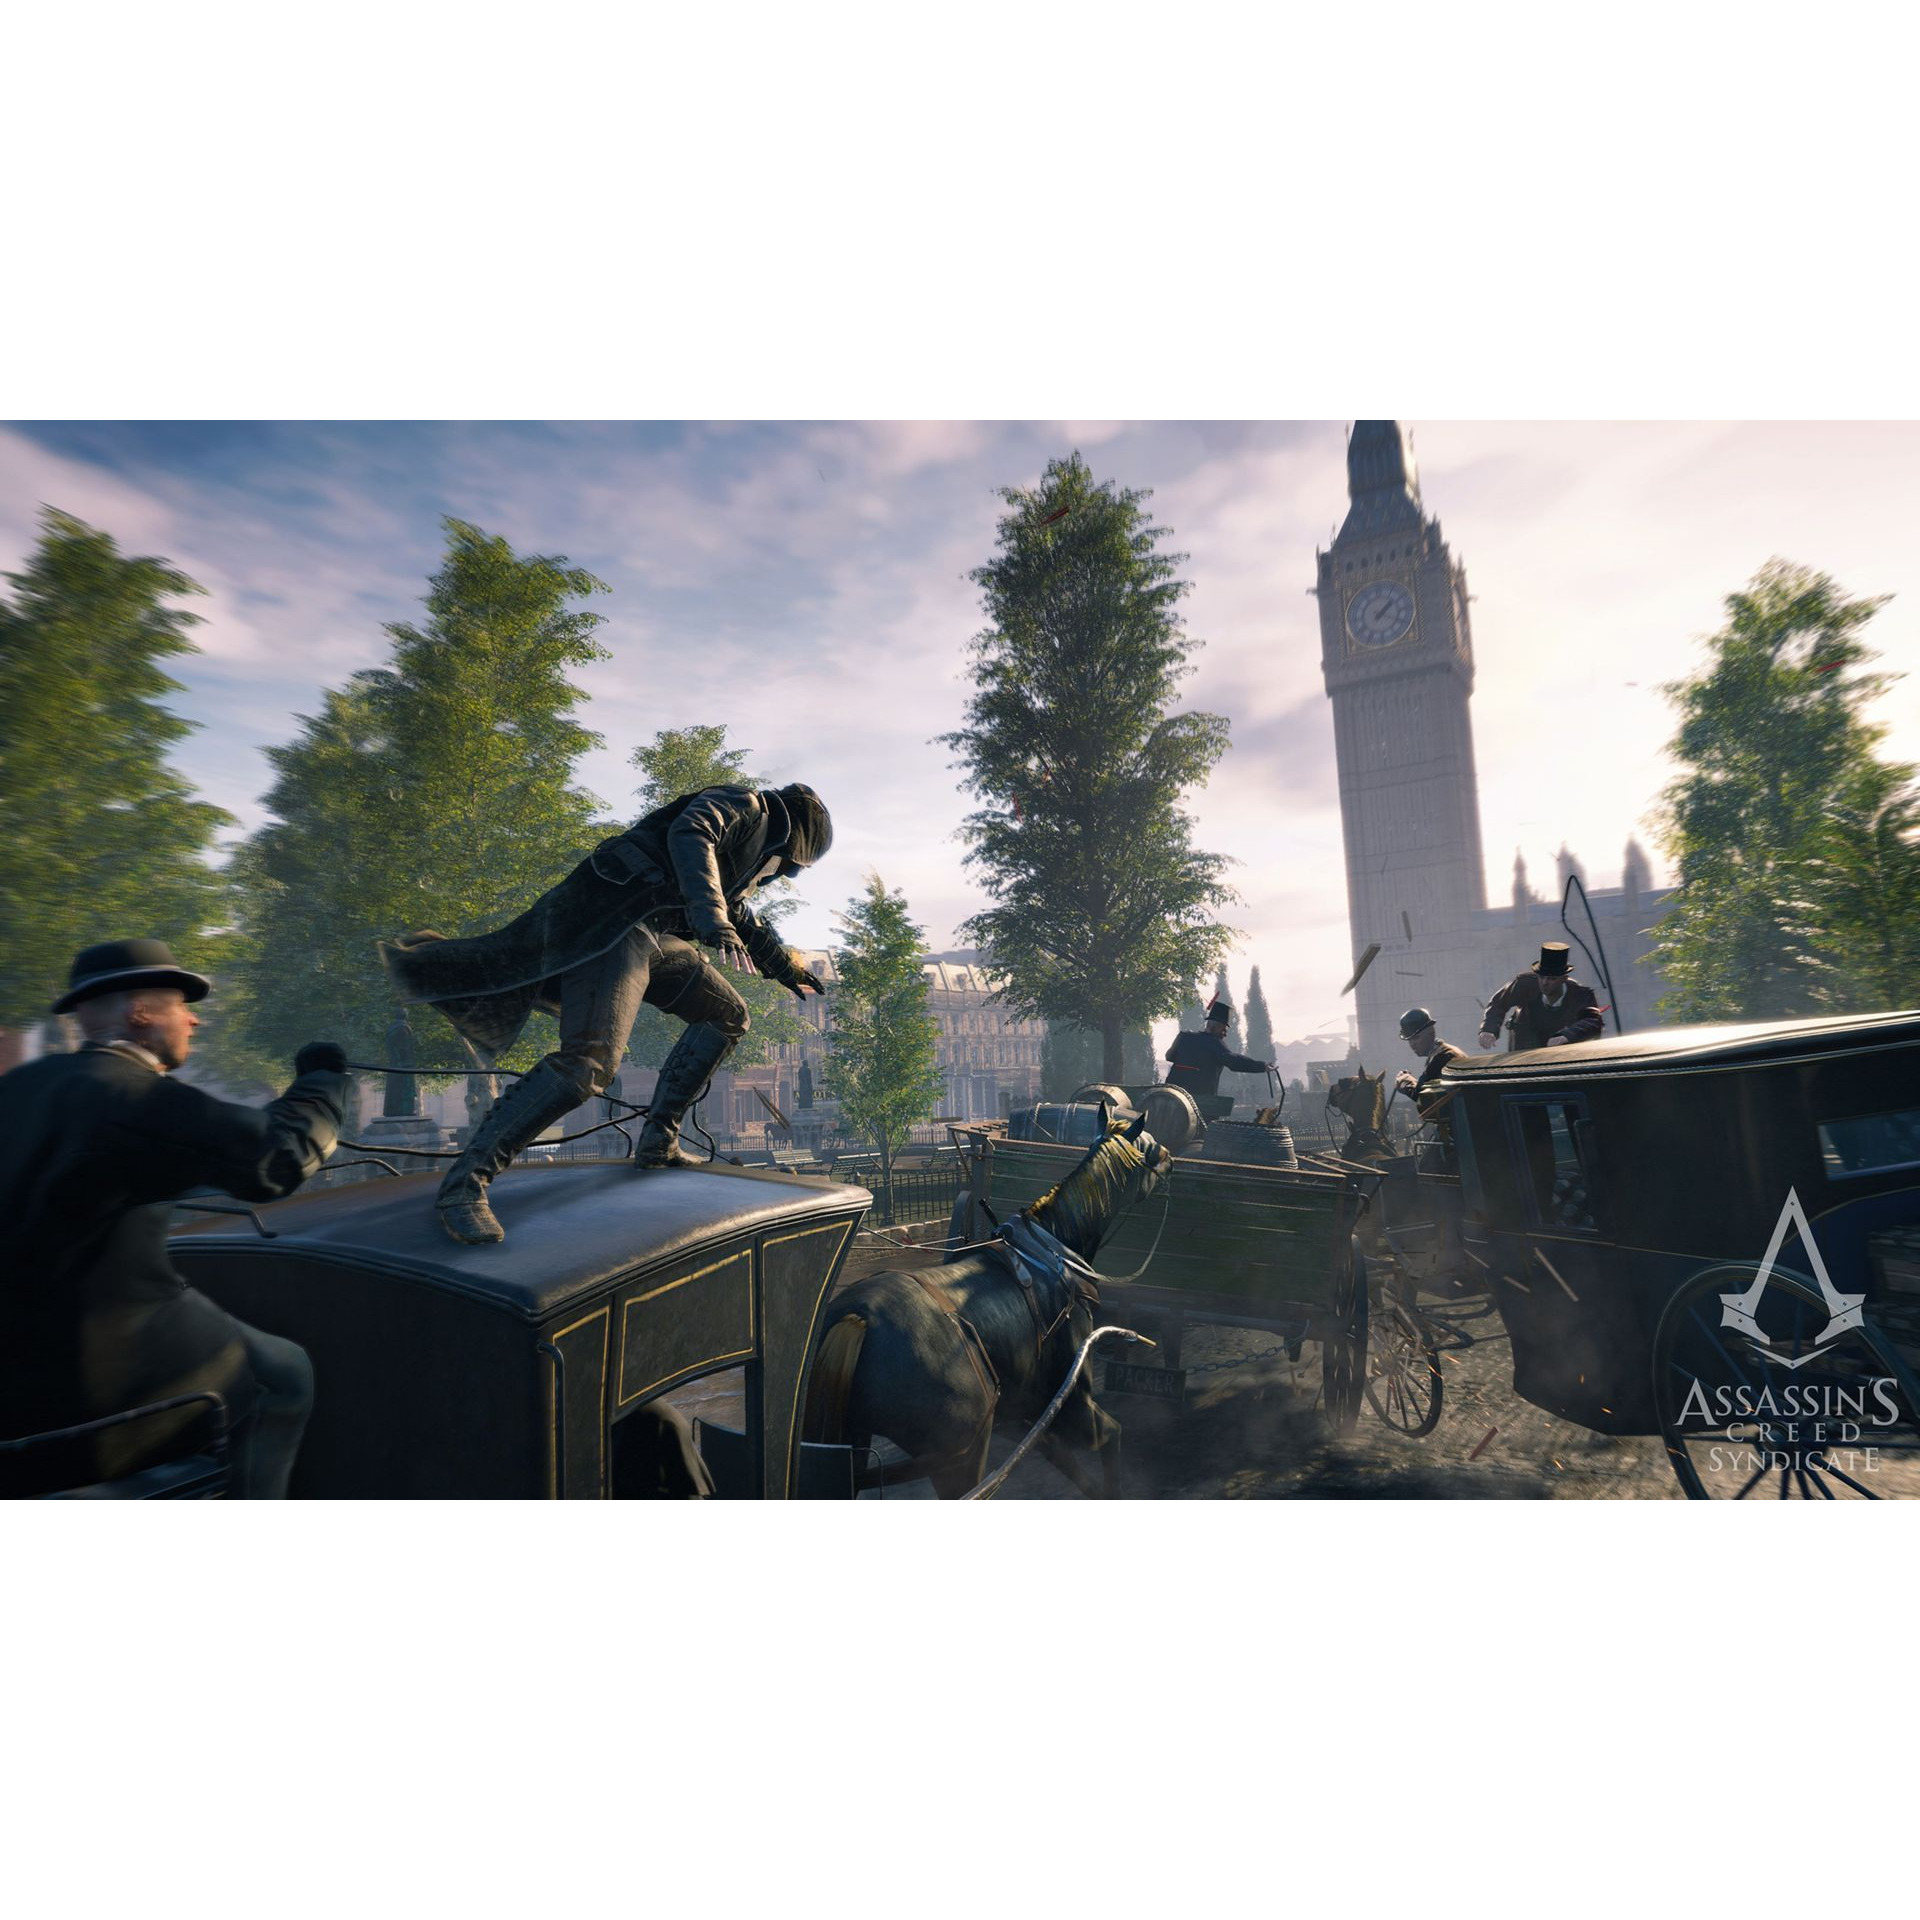 Игра Ubisoft Assassin's Creed Syndicate (PS4)